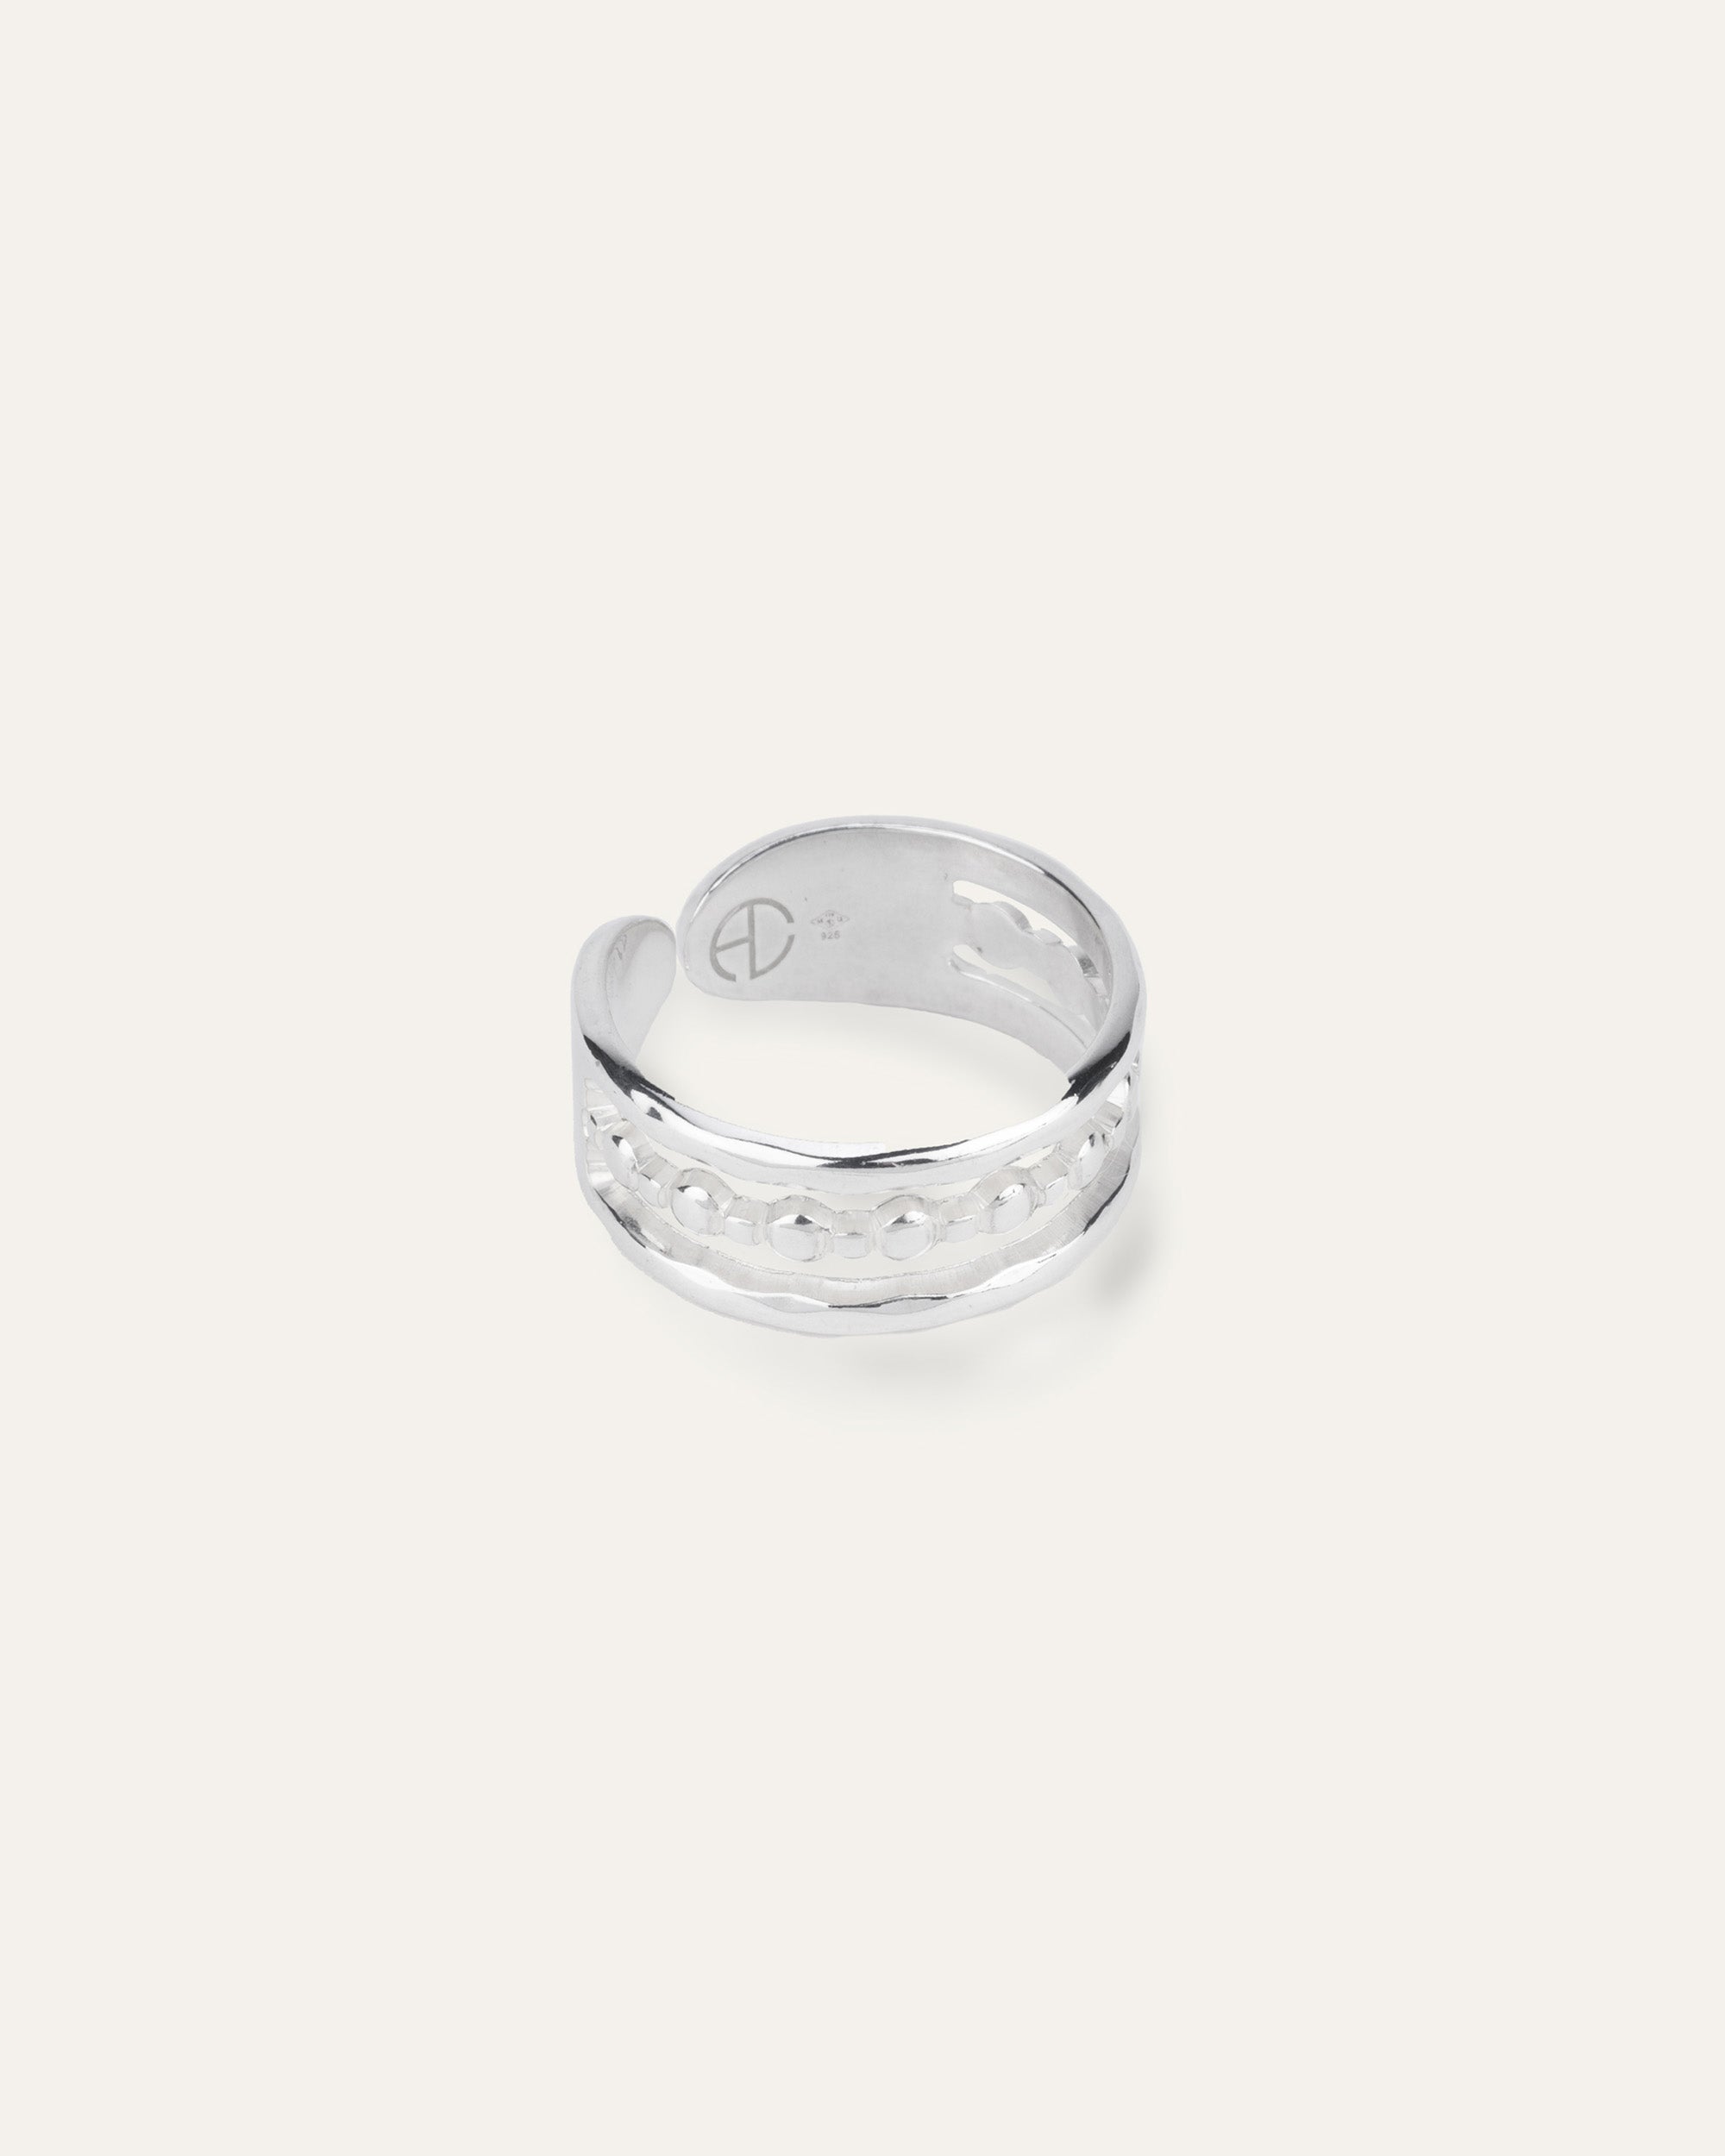 Maricopa silver ring